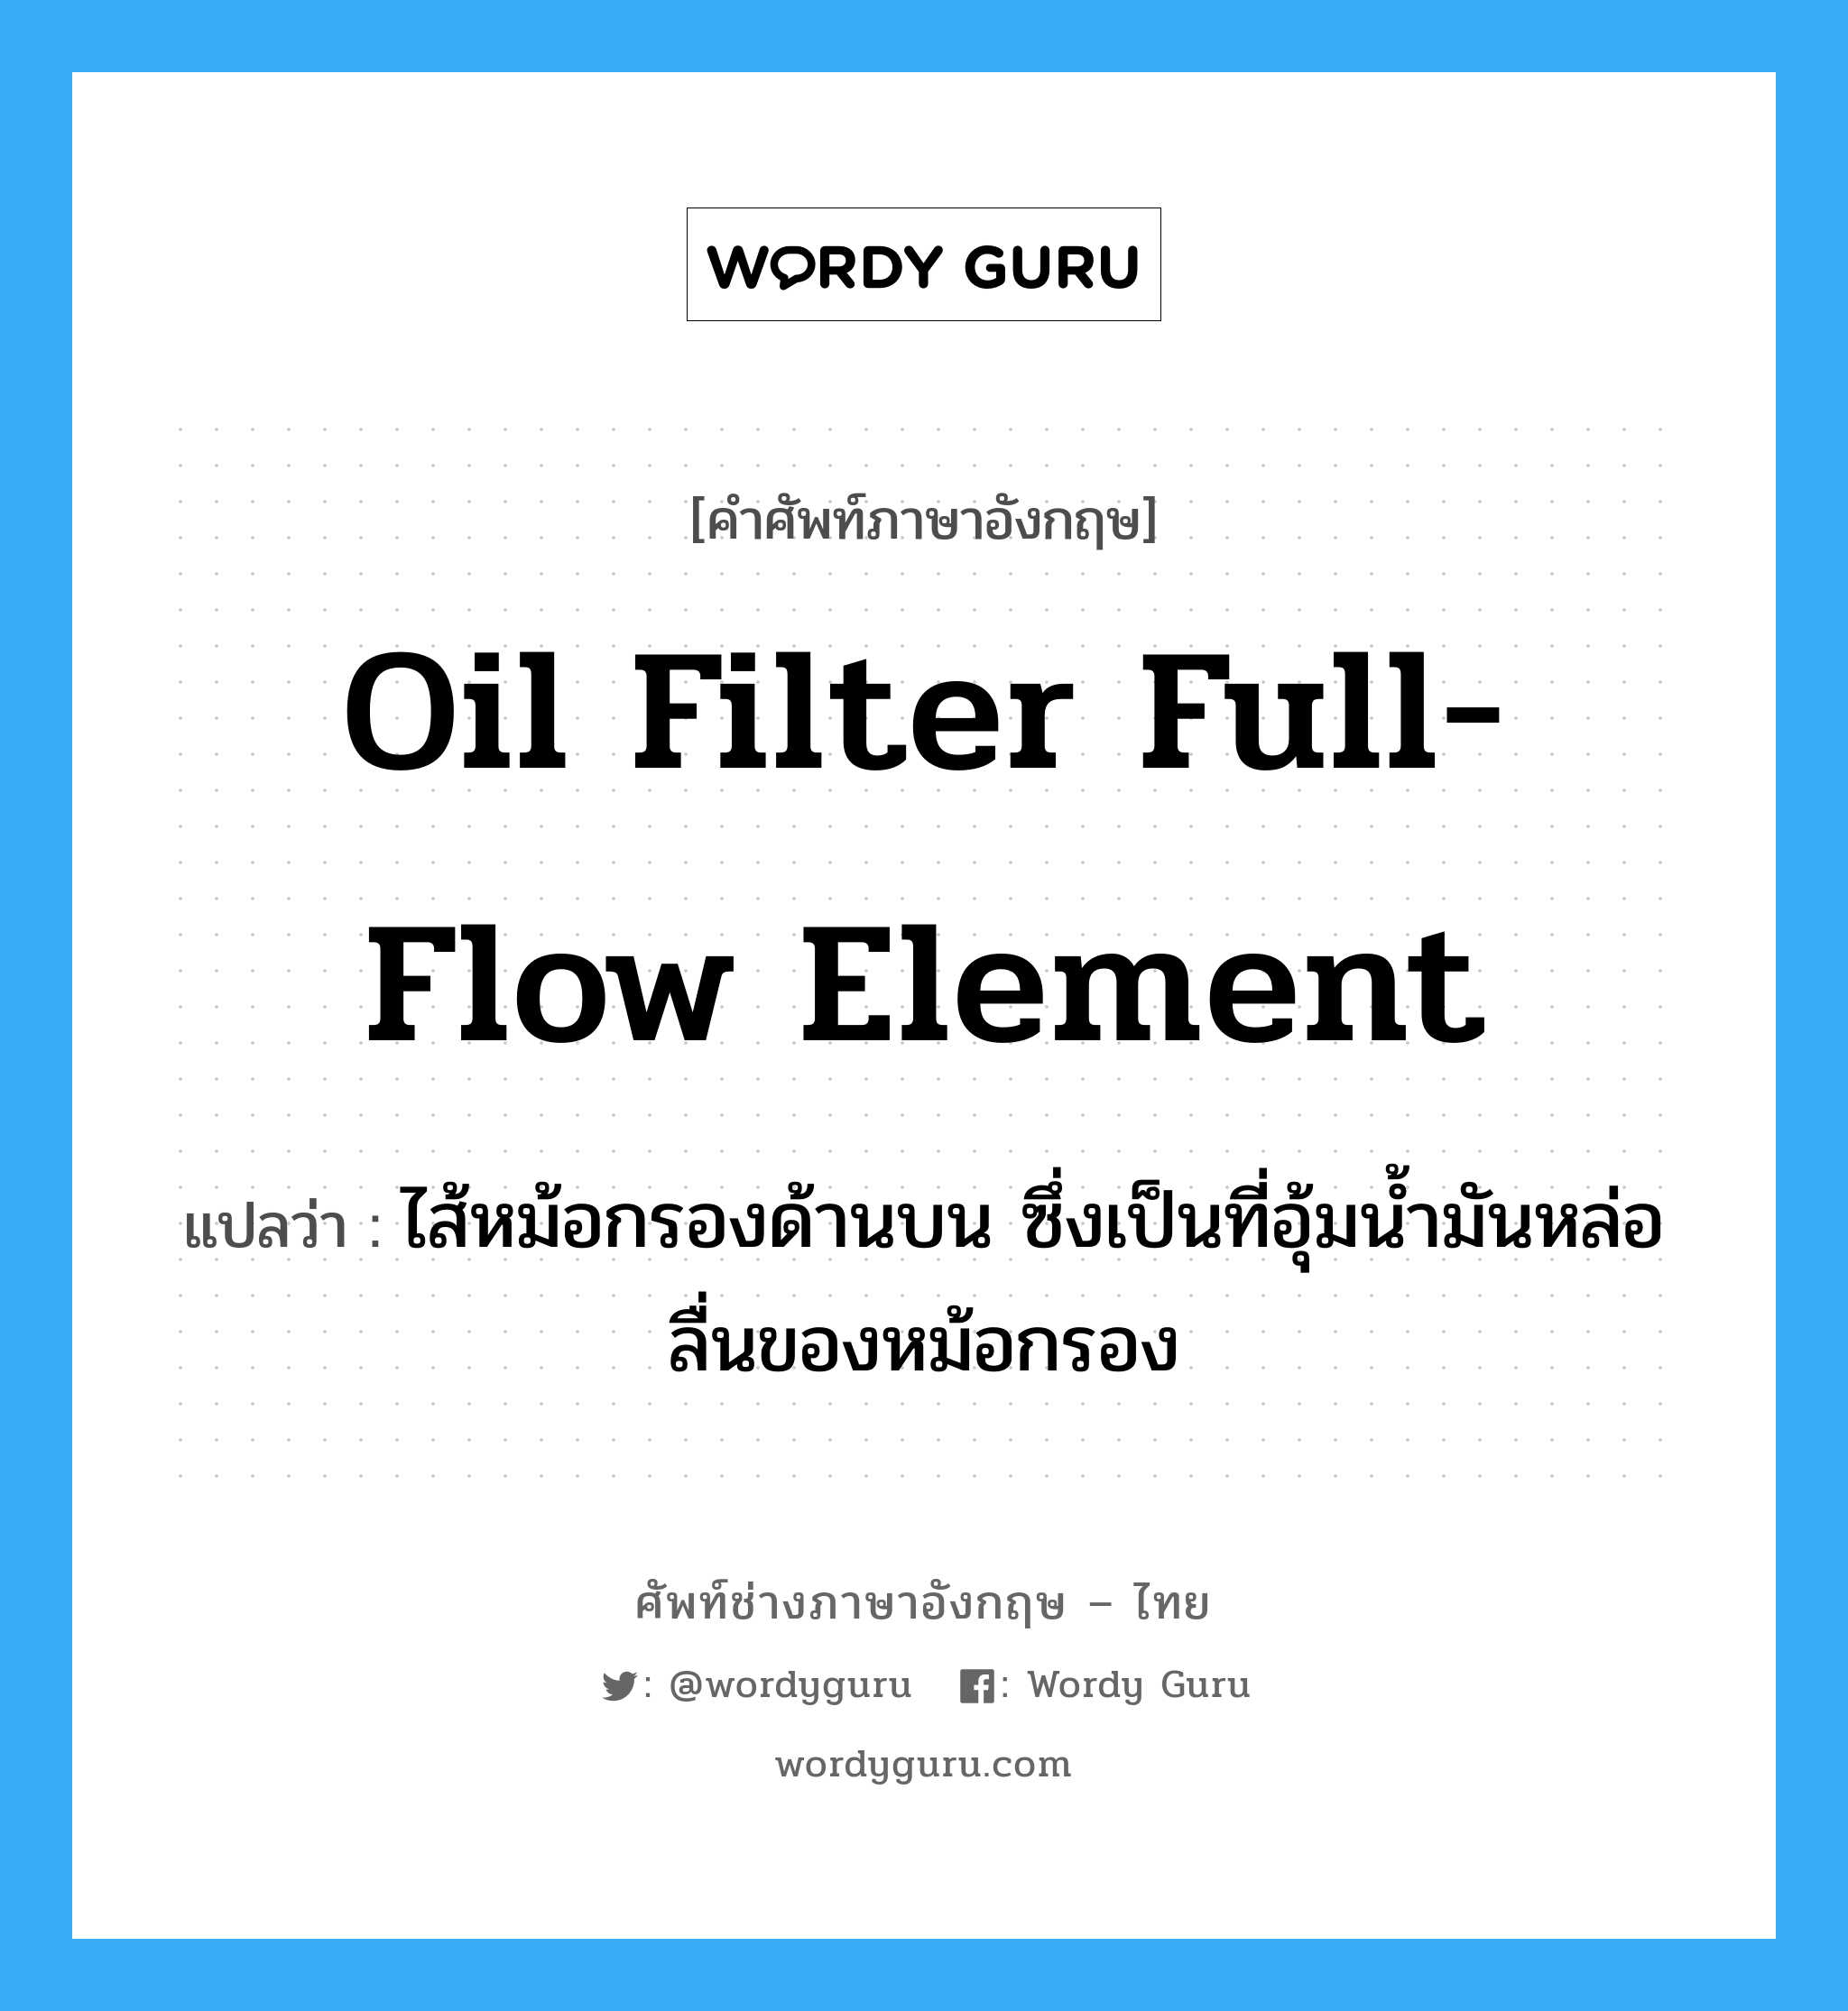 oil filter full-flow element แปลว่า?, คำศัพท์ช่างภาษาอังกฤษ - ไทย oil filter full-flow element คำศัพท์ภาษาอังกฤษ oil filter full-flow element แปลว่า ไส้หม้อกรองด้านบน ซึ่งเป็นที่อุ้มน้ำมันหล่อลื่นของหม้อกรอง